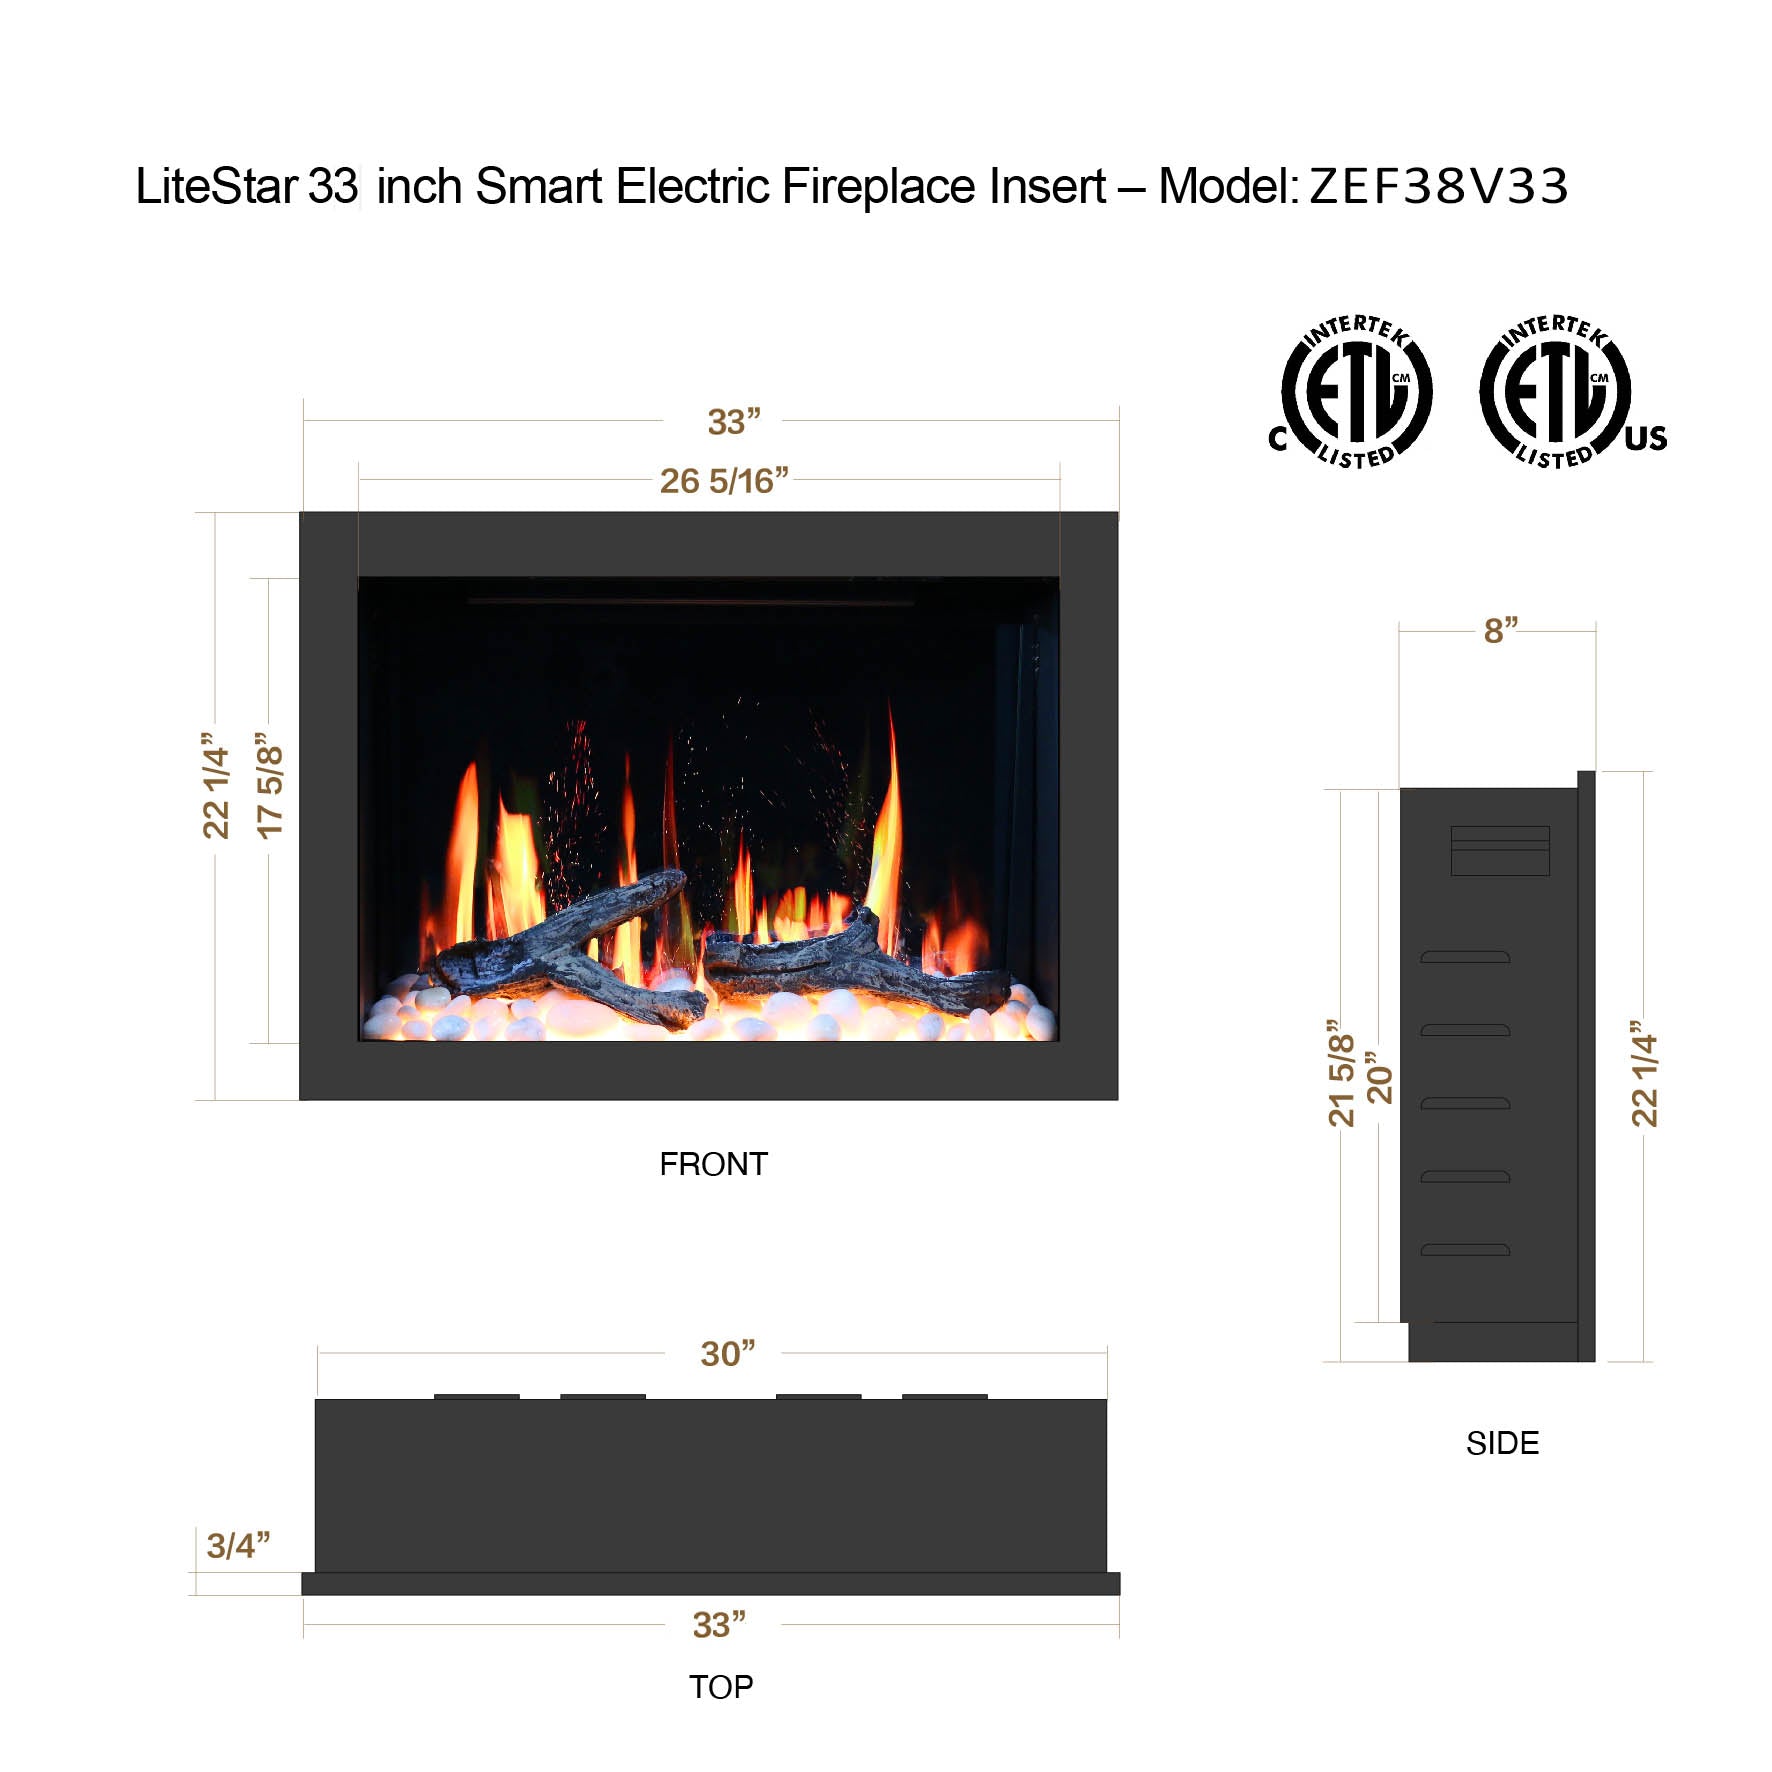 Litedeer LiteStar 33 inch Smart Electric Fireplace Inserts-ZEF38VC33-Dimensions